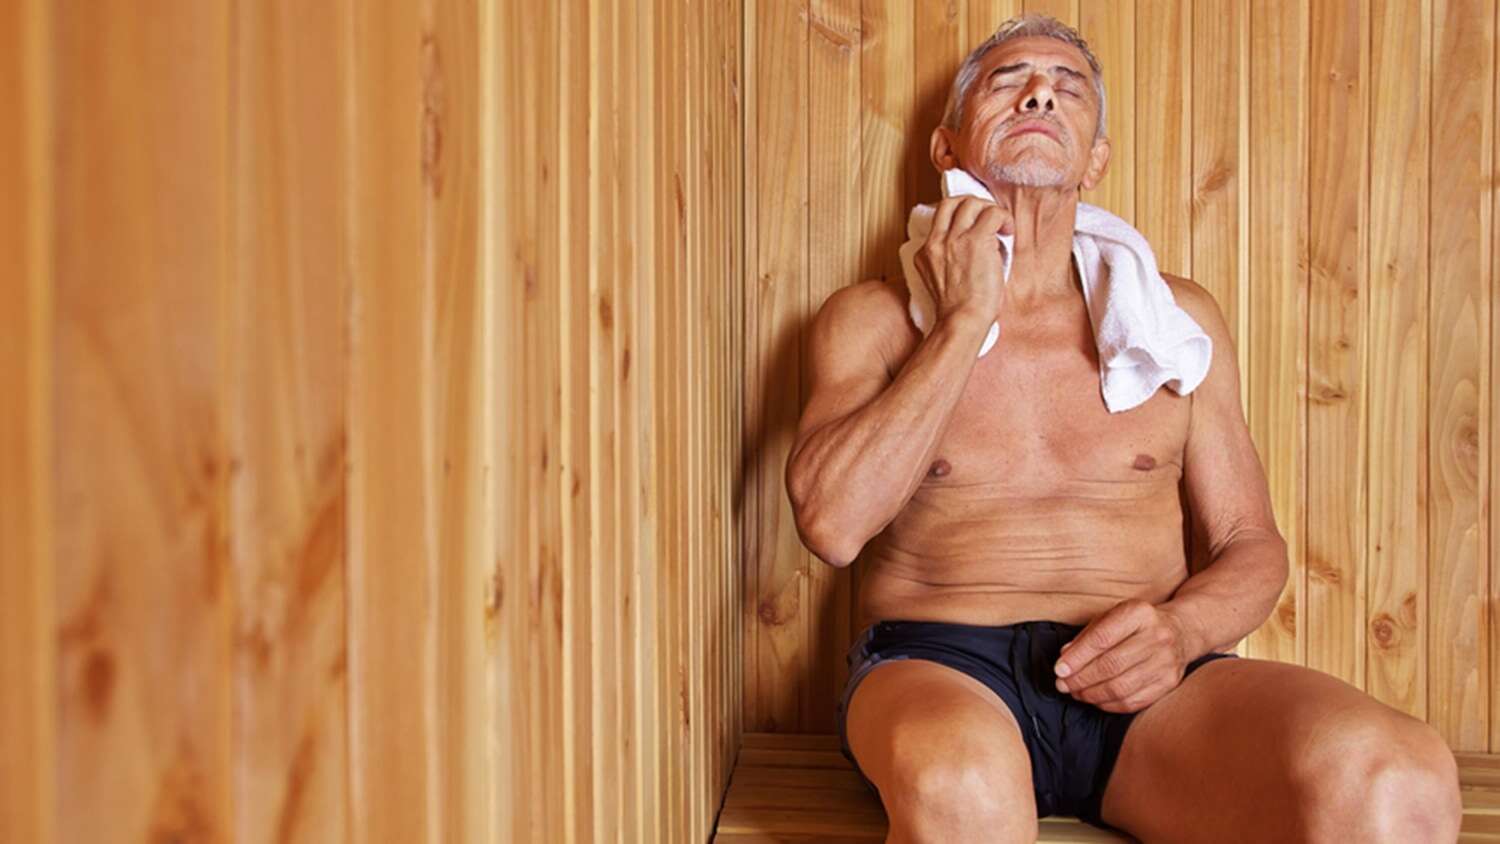 Wiping sweat in a sauna